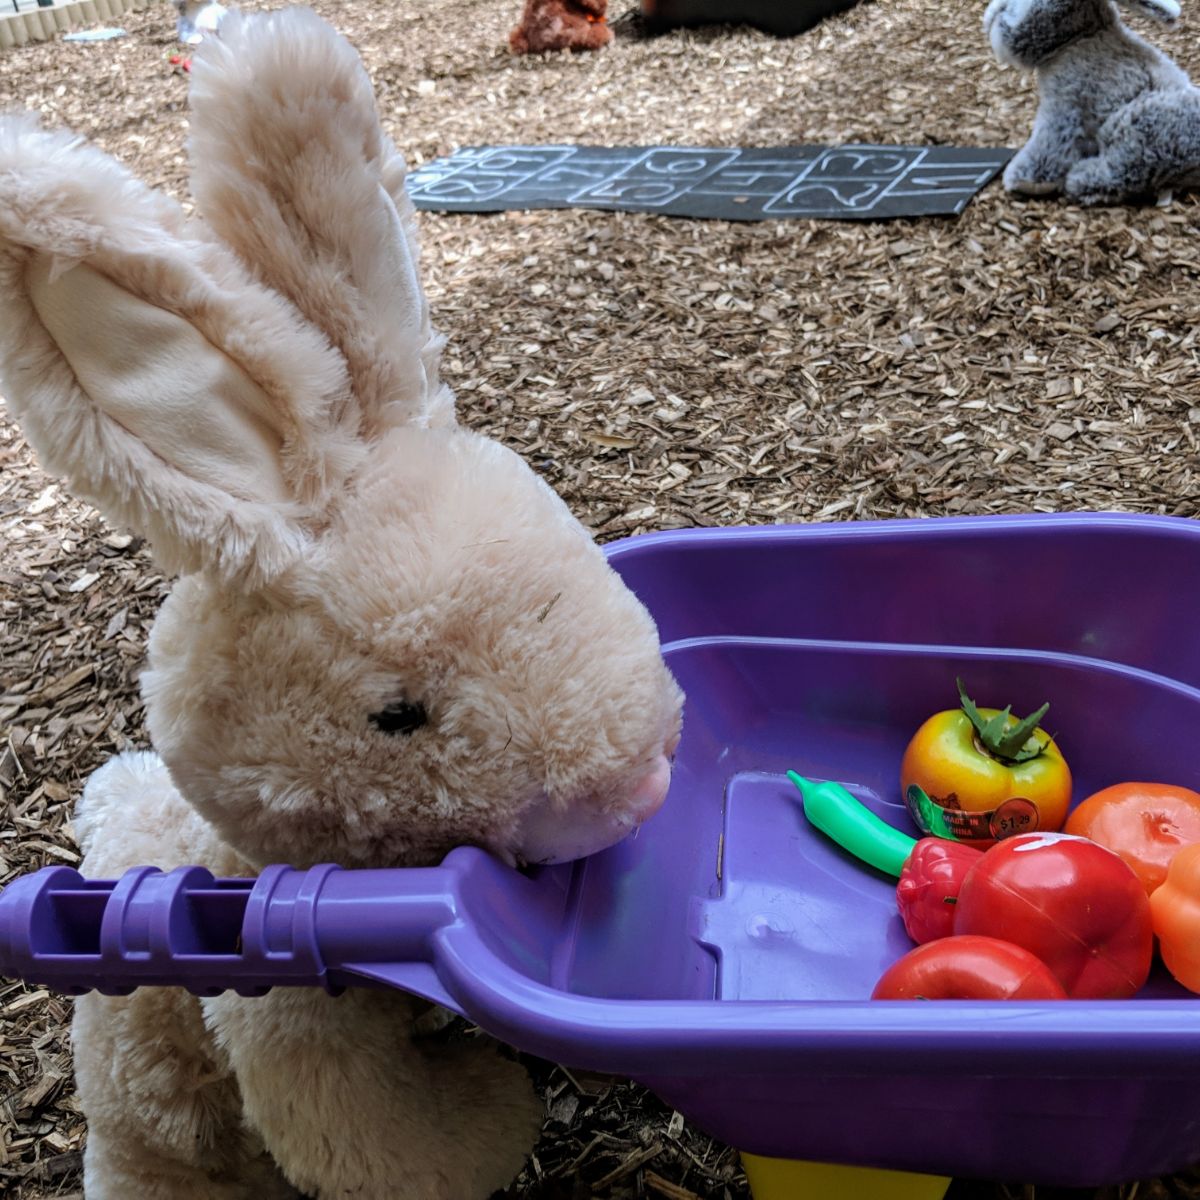 Stuffed bunny rabbit with toy wheelbarrow of vegetables